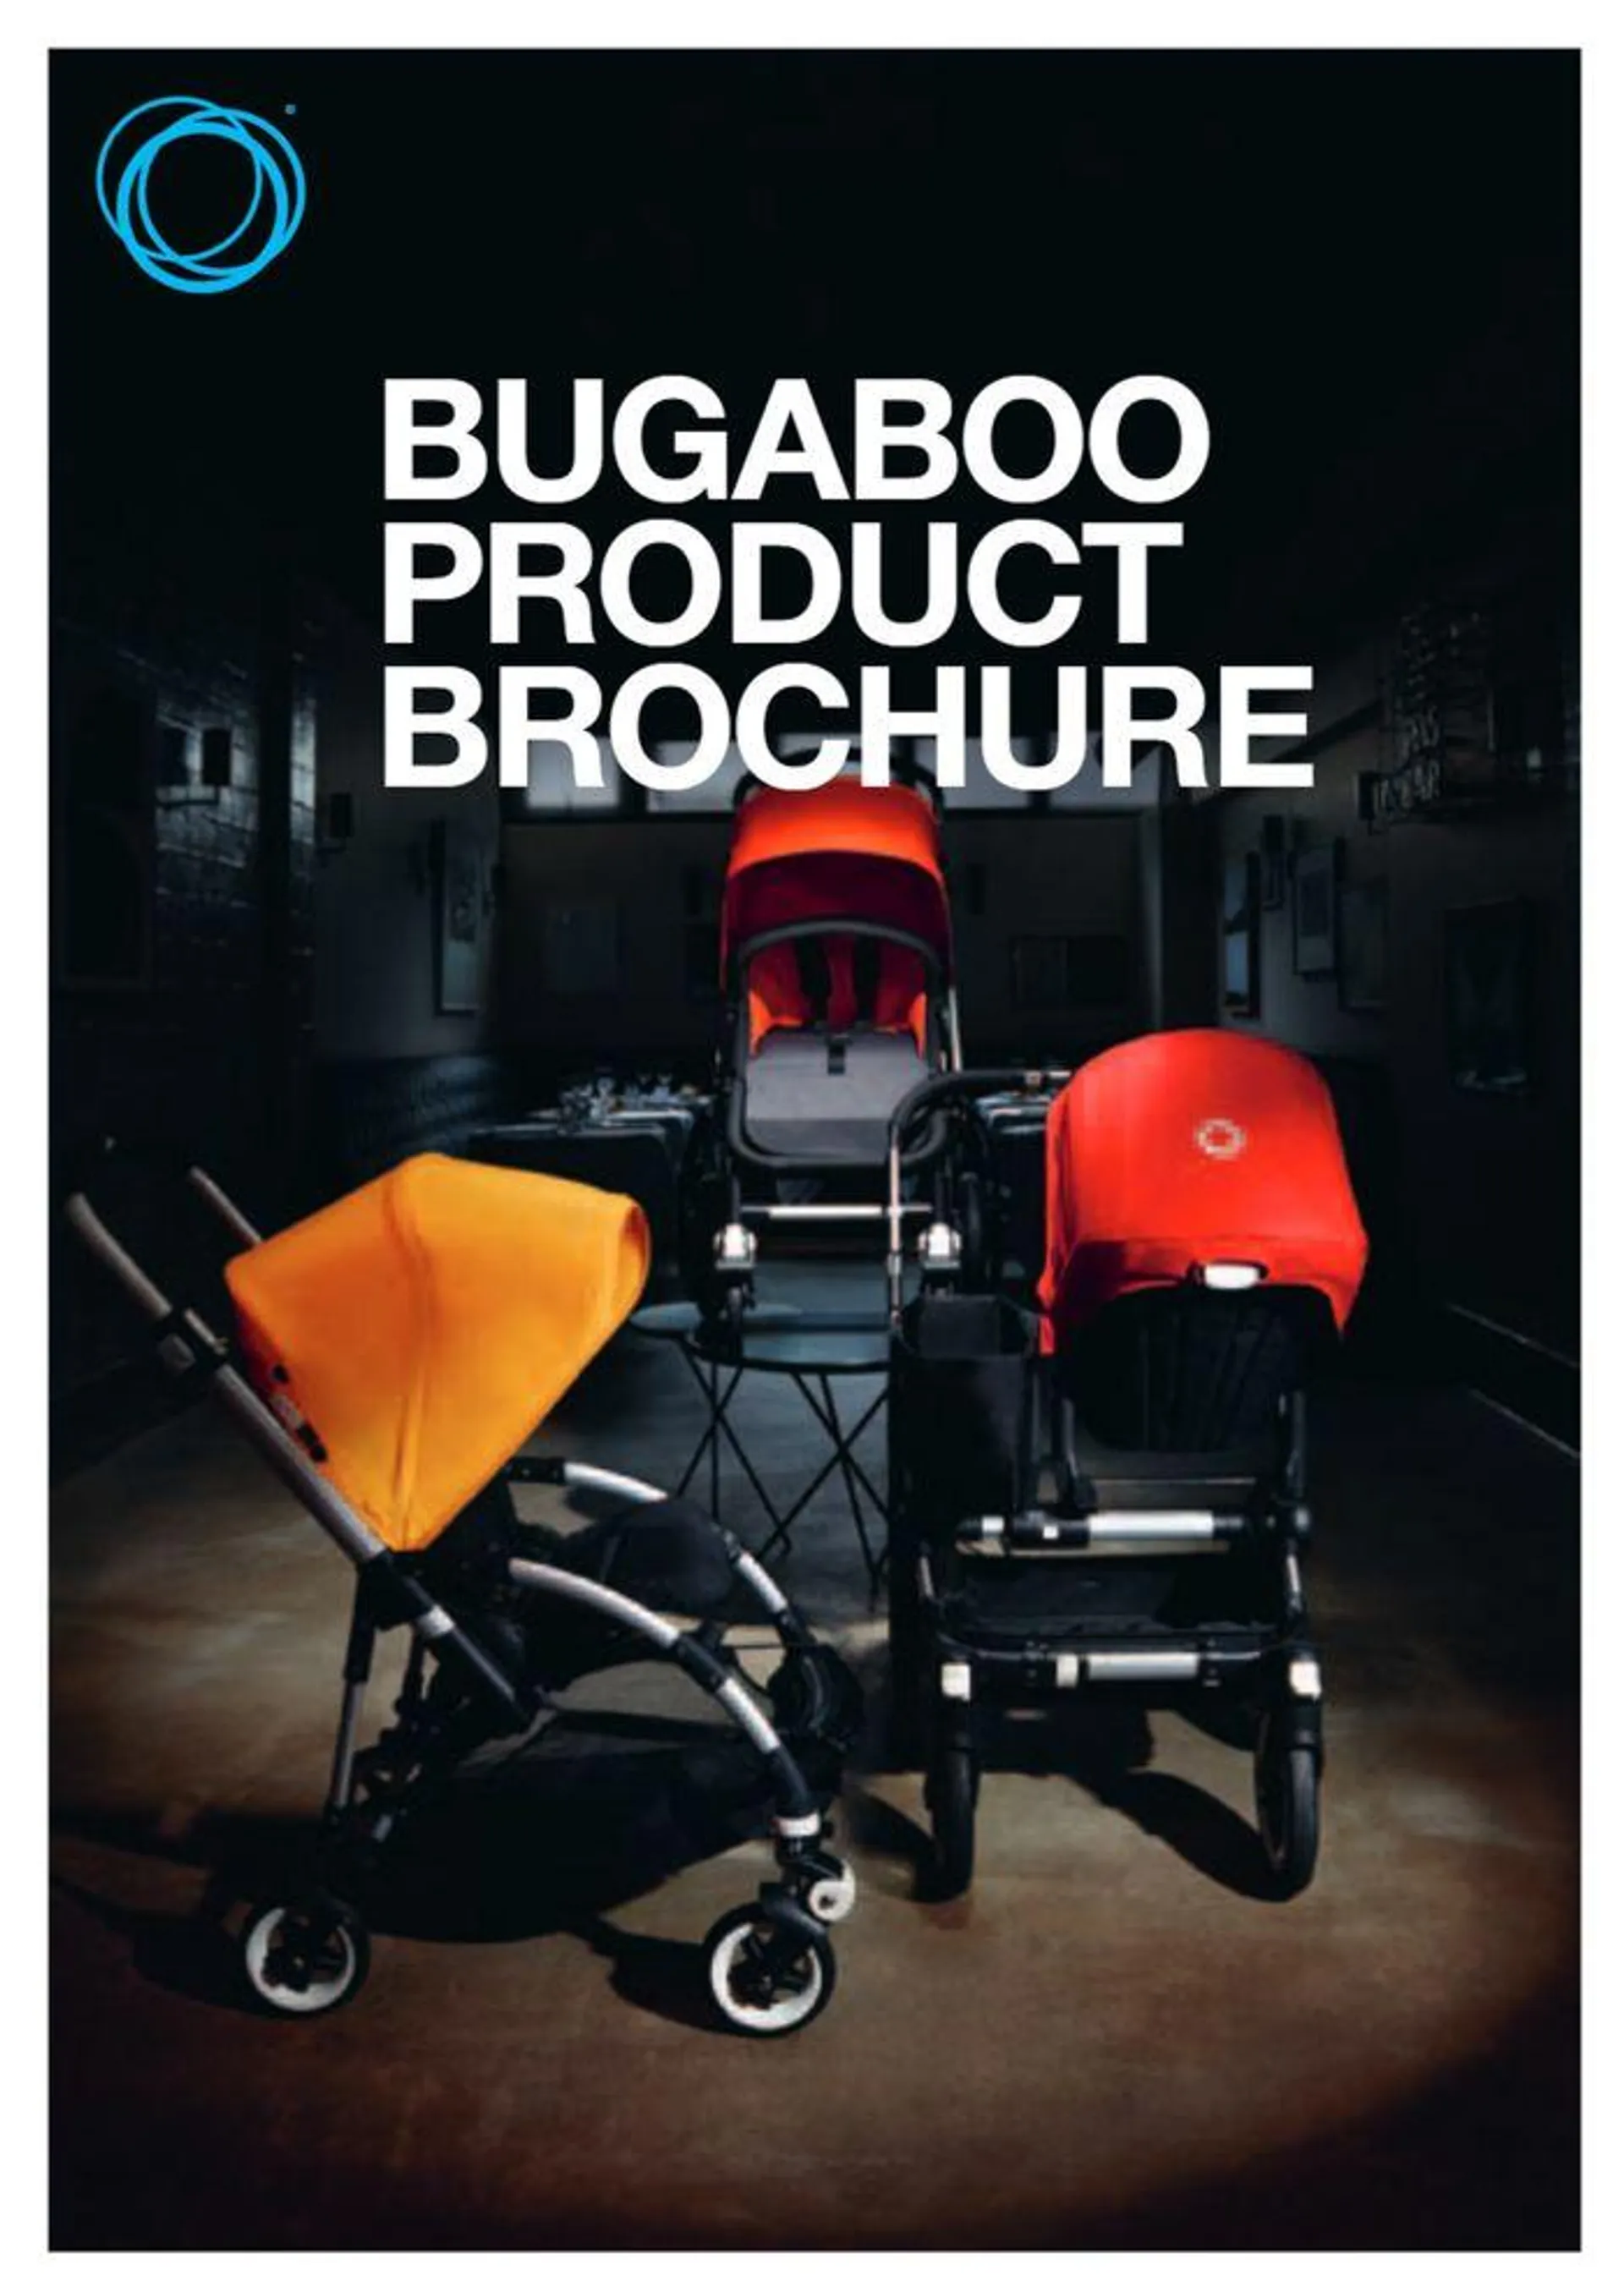 Bugaboo product brochure - 1